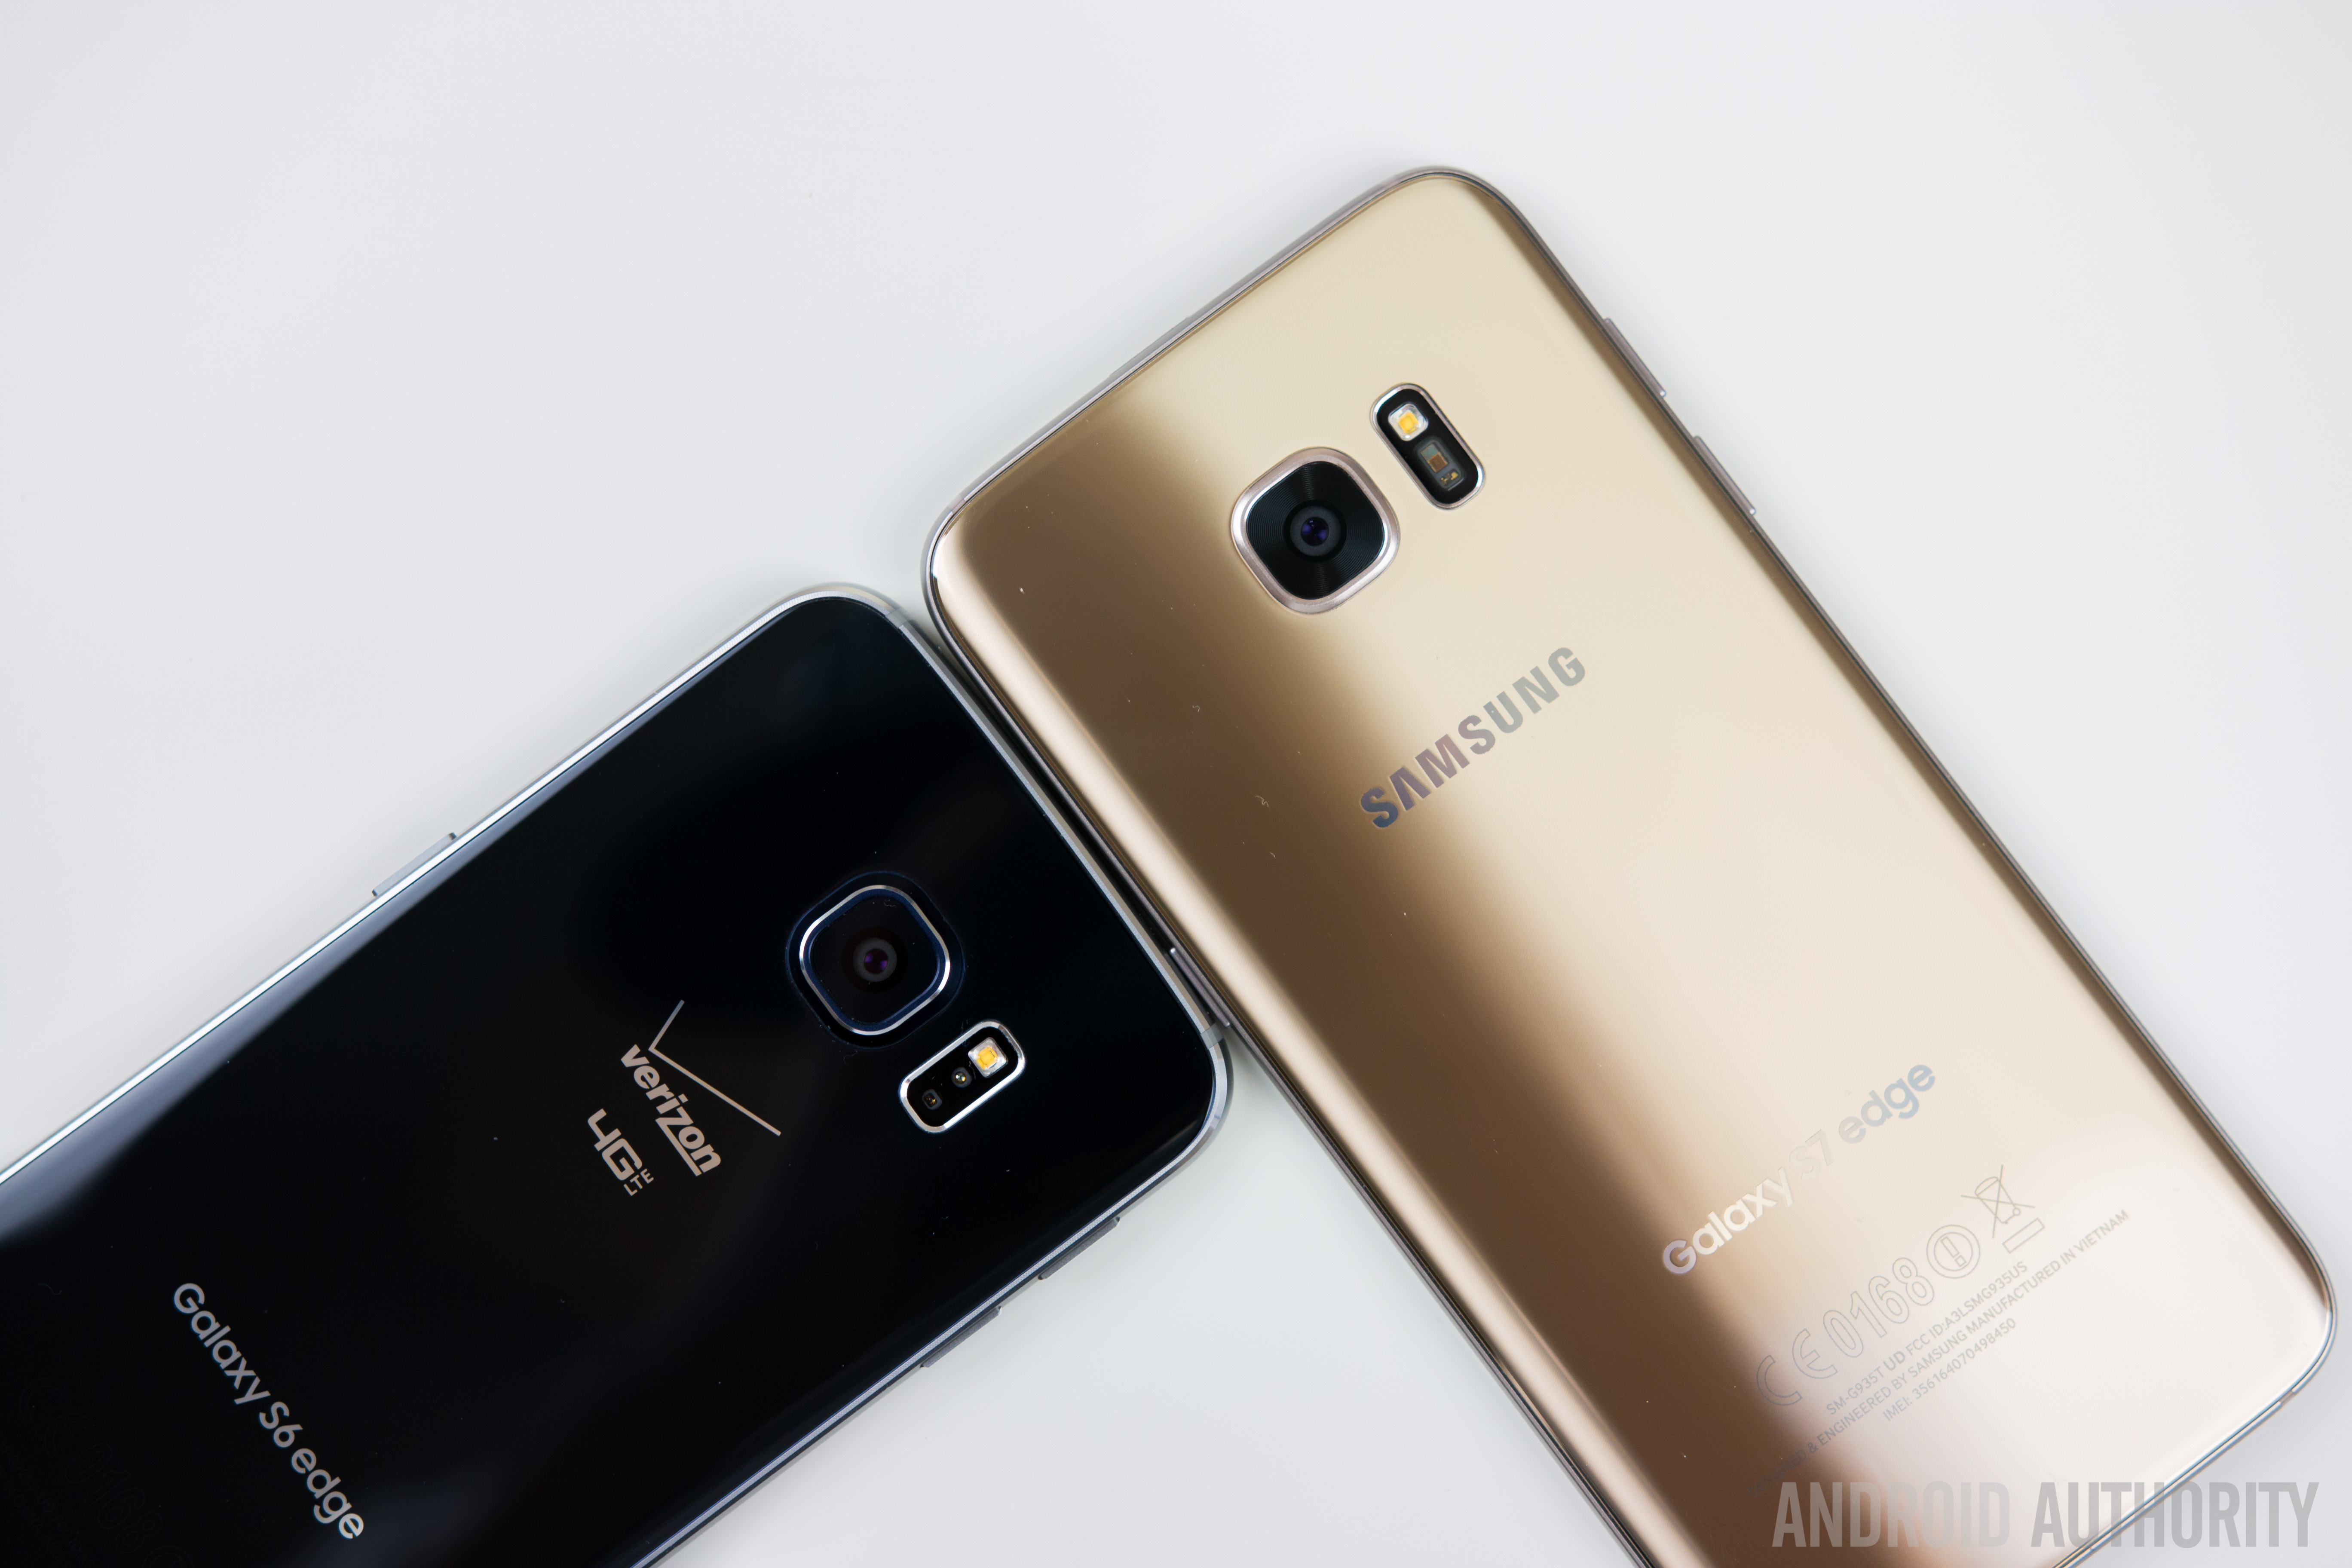 Shipley Dragende cirkel dinsdag Samsung Galaxy S7 Edge vs Galaxy S6 Edge - Android Authority